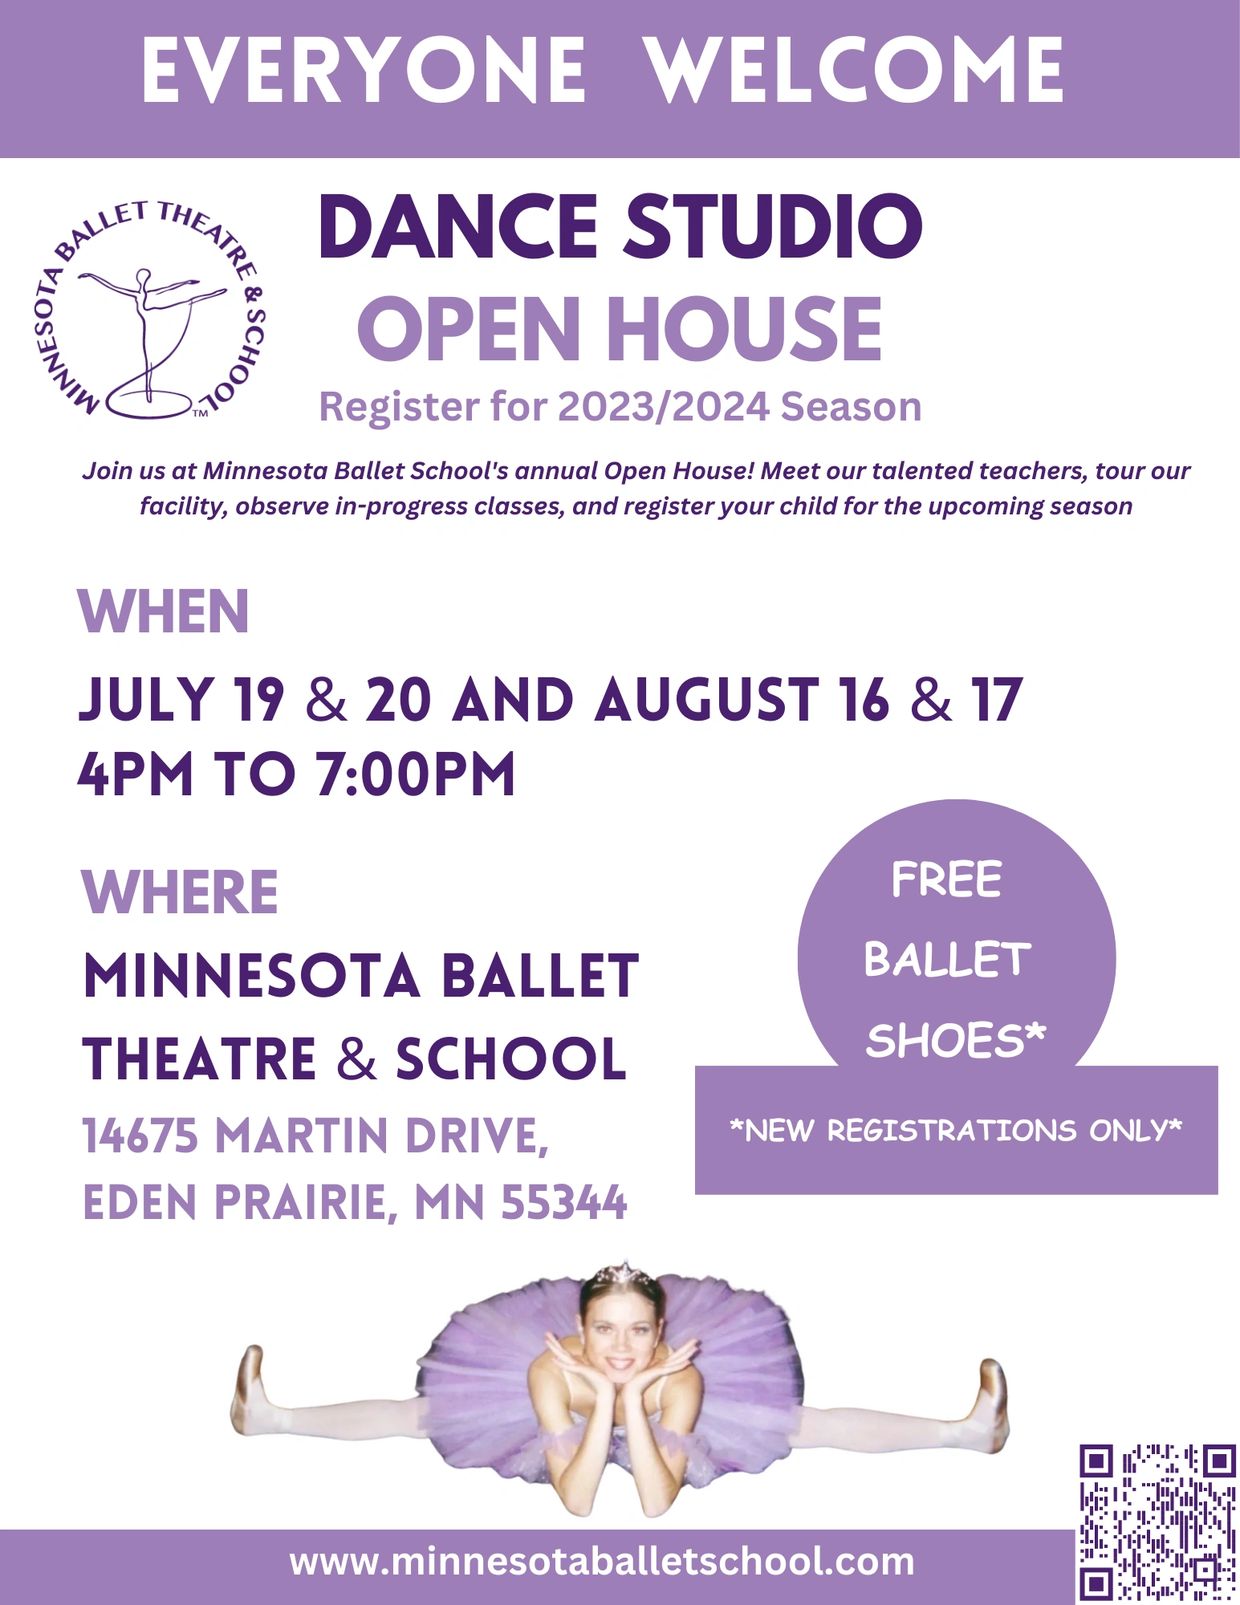 Open House, Fall registration, Free ballet shoes, Classical Ballet Education, Vaganova Method